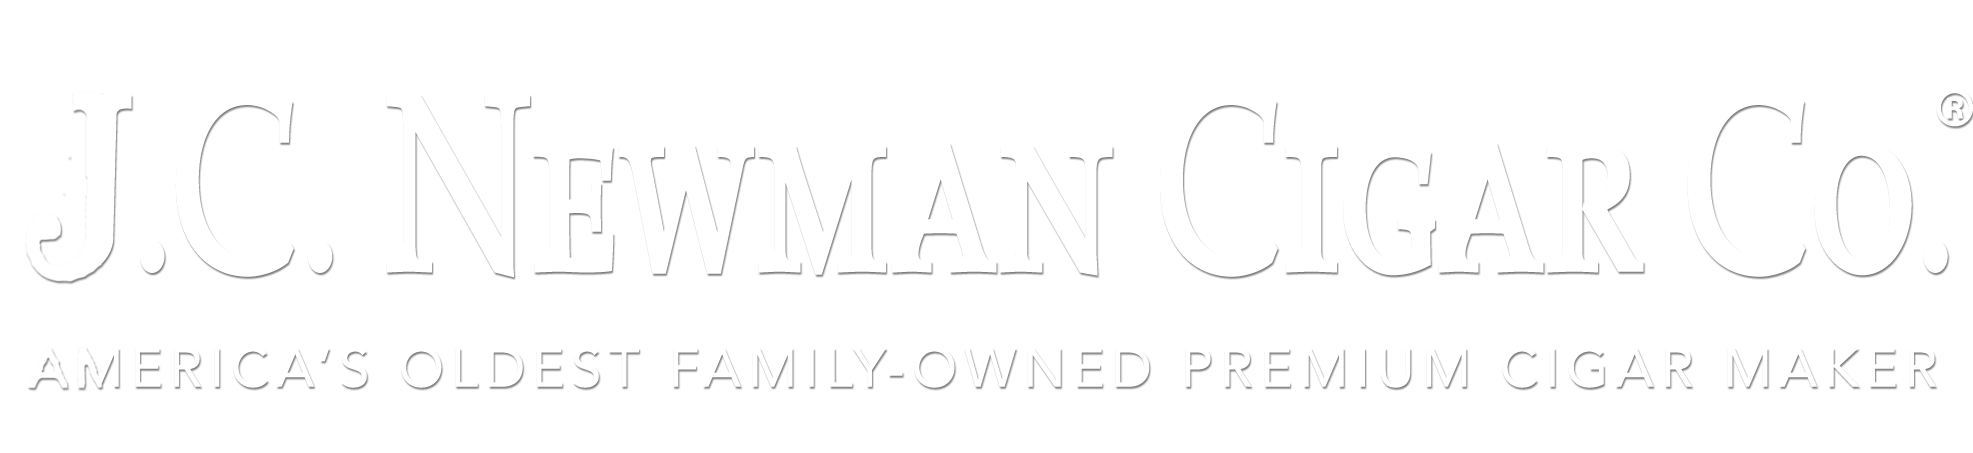 America S Oldest Family Owned Premium Cigar Maker J C Newman